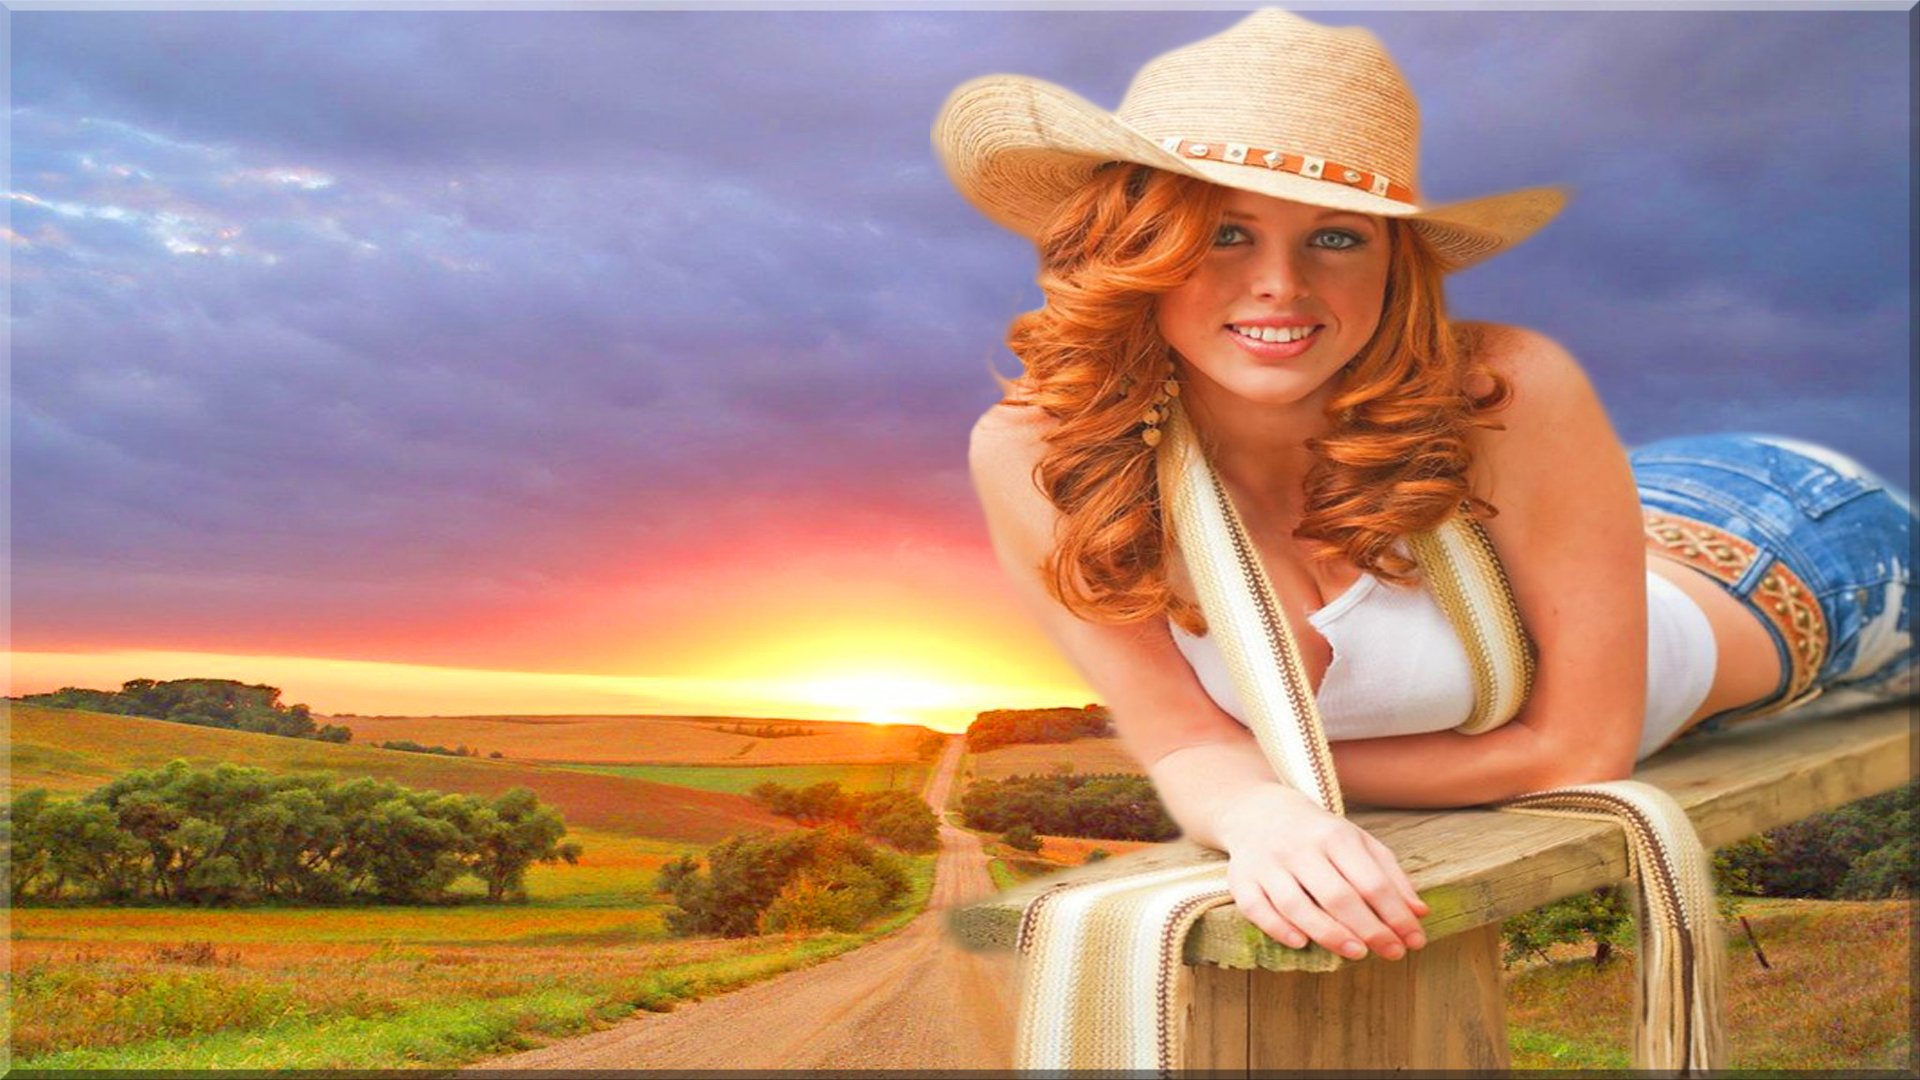 cowgirl wallpaper,beauty,sky,hat,summer,blond